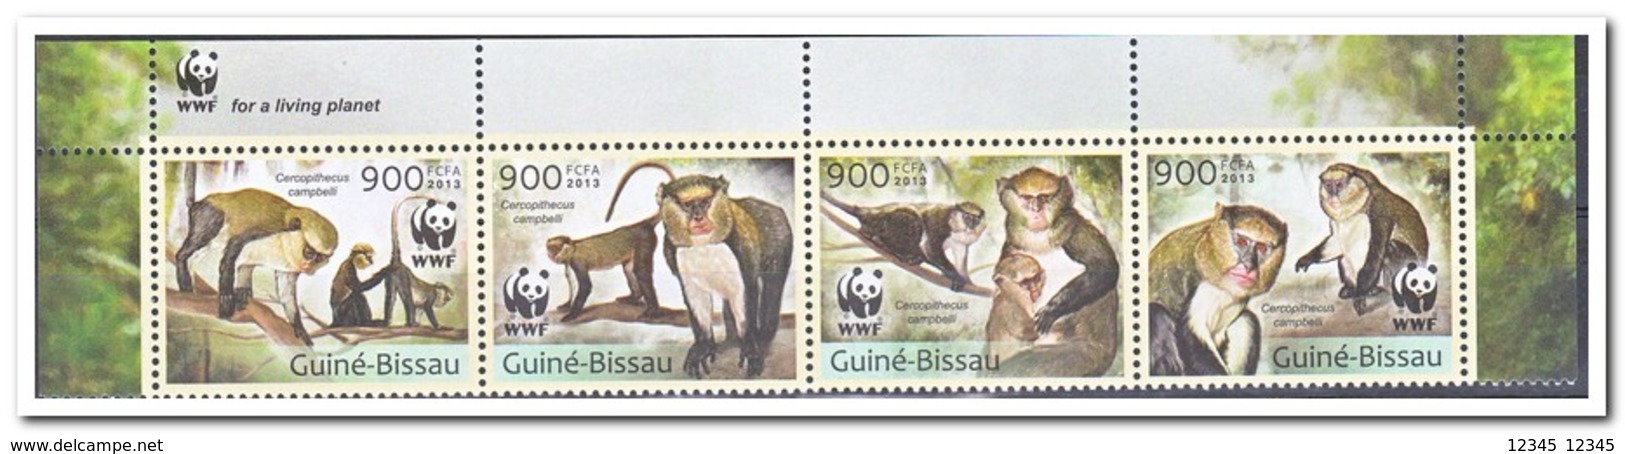 Guinea Bissau 2013, Postfris MNH, WWF - Guinea-Bissau